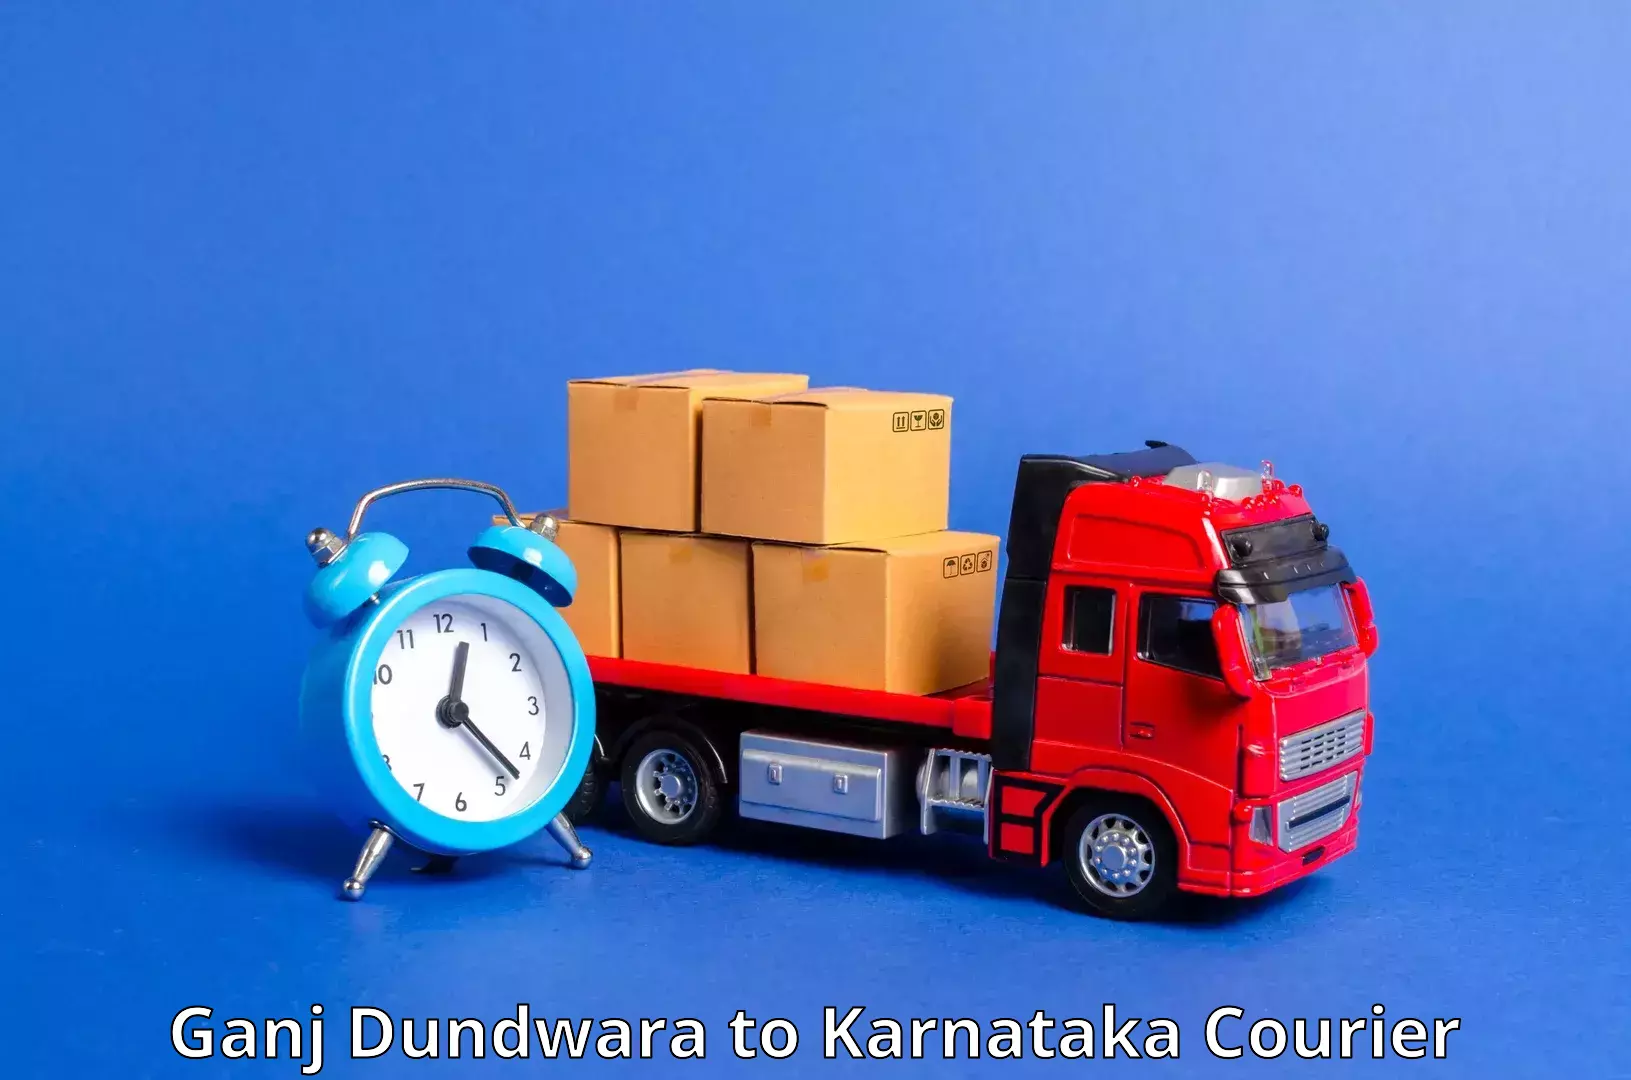 Doorstep delivery service Ganj Dundwara to Sandur